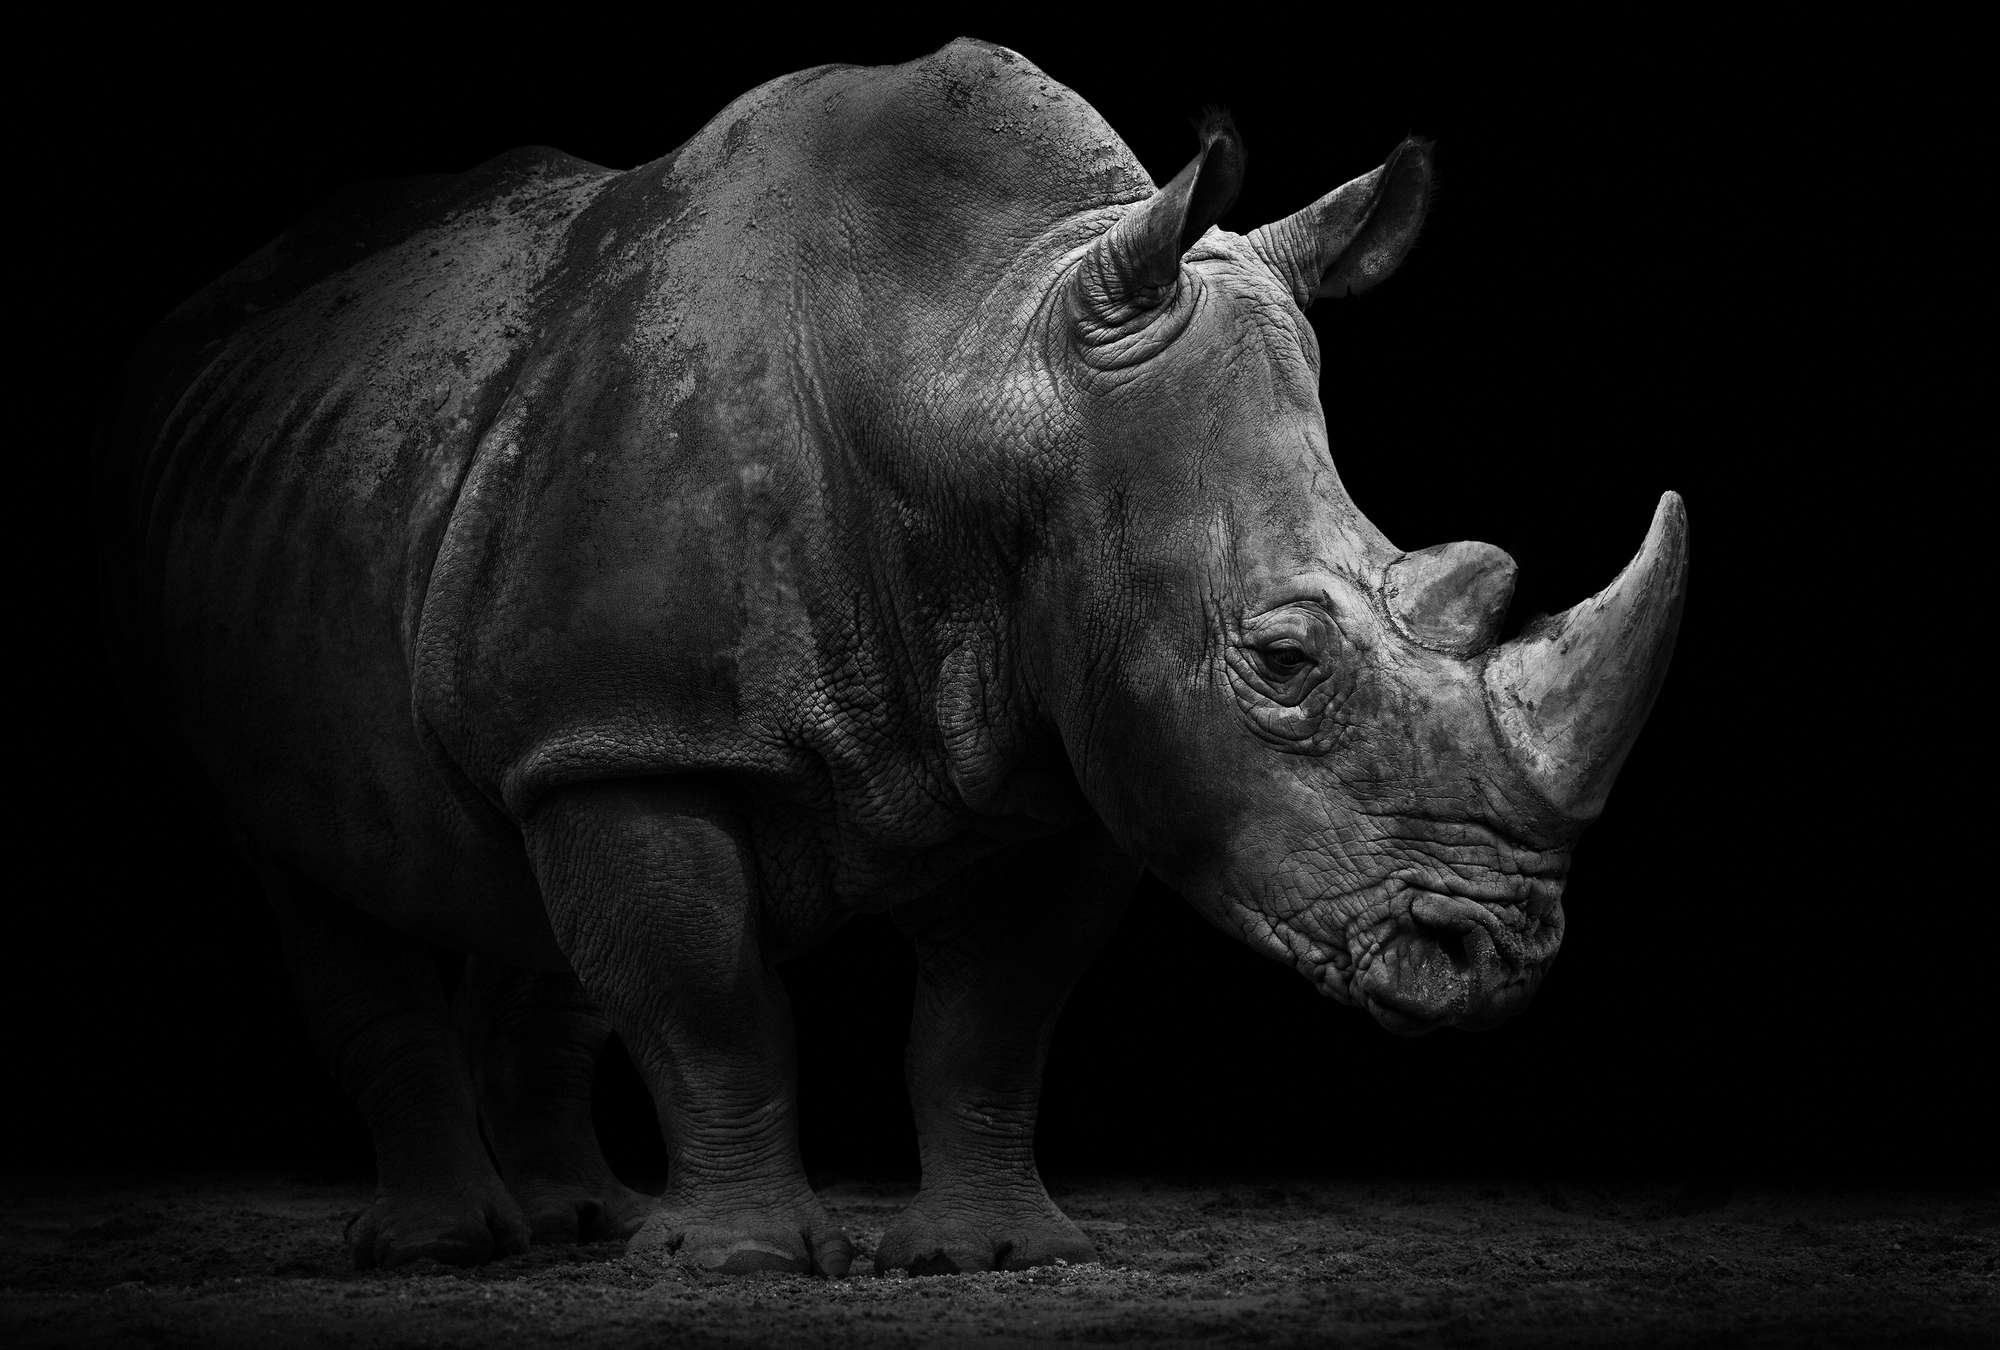             Photo wallpaper rhino against black background
        